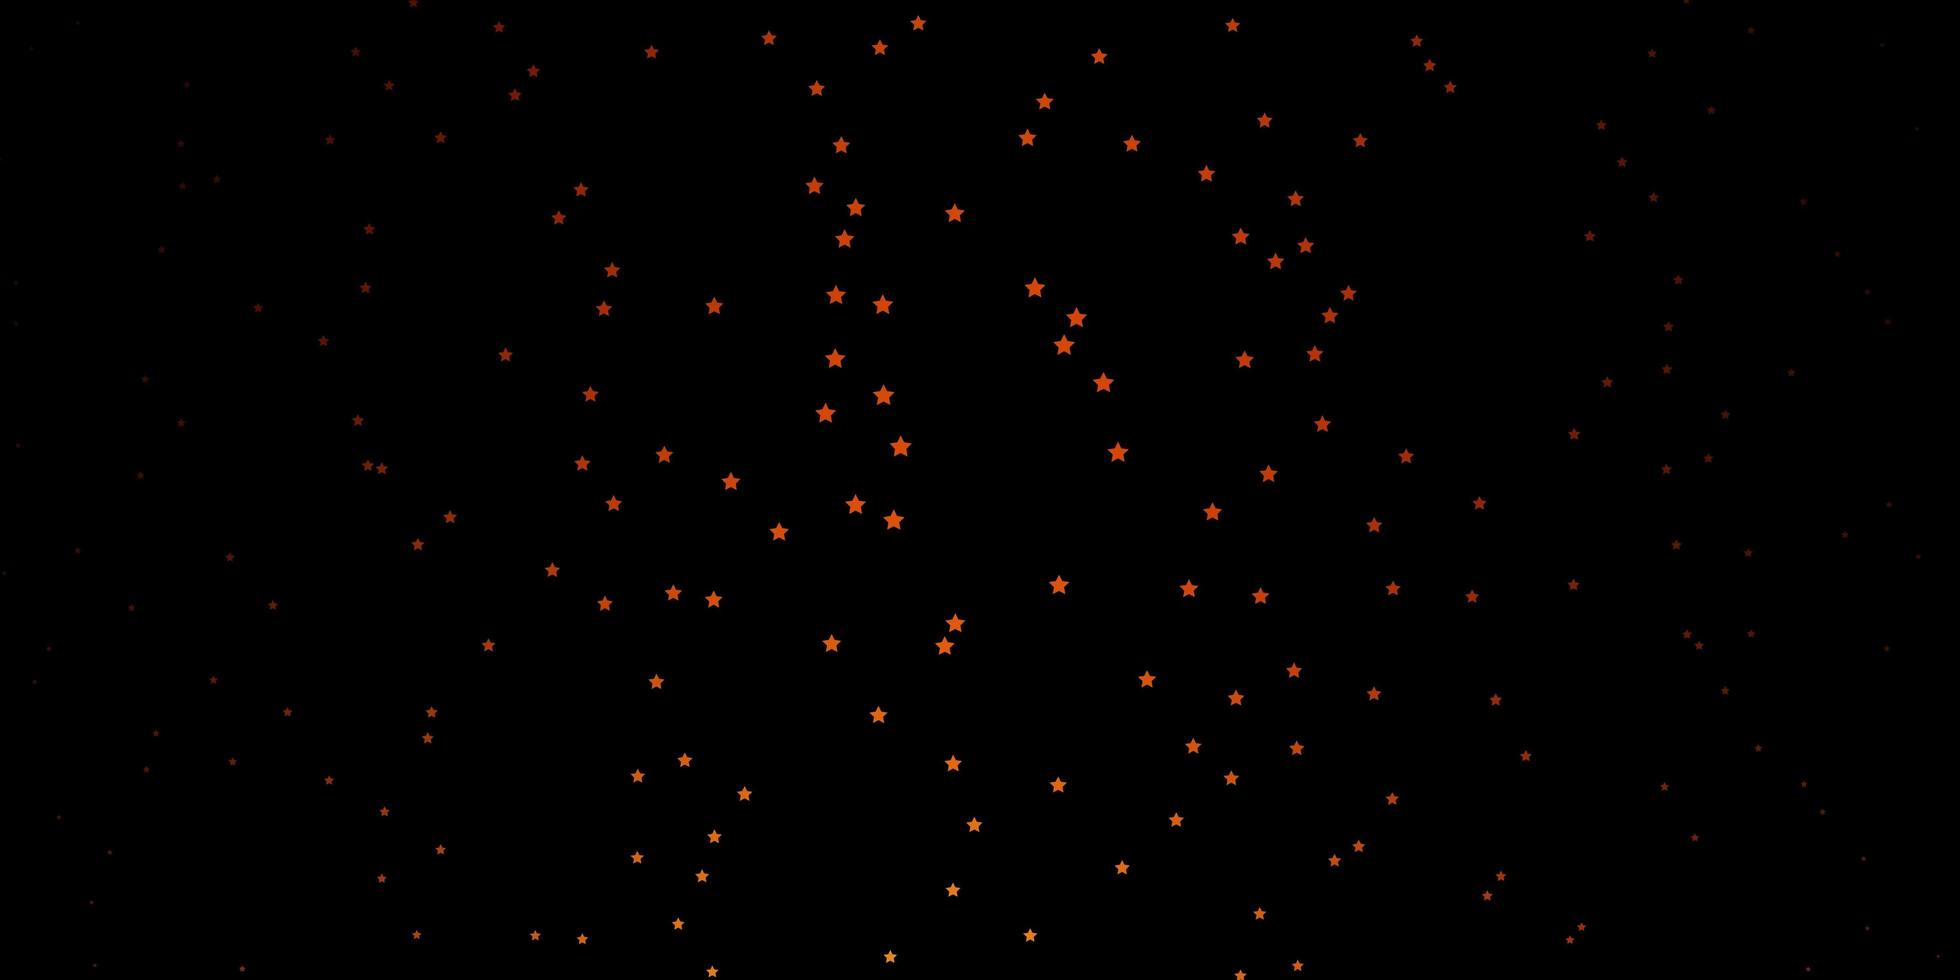 Plantilla de vector naranja oscuro con estrellas de neón.